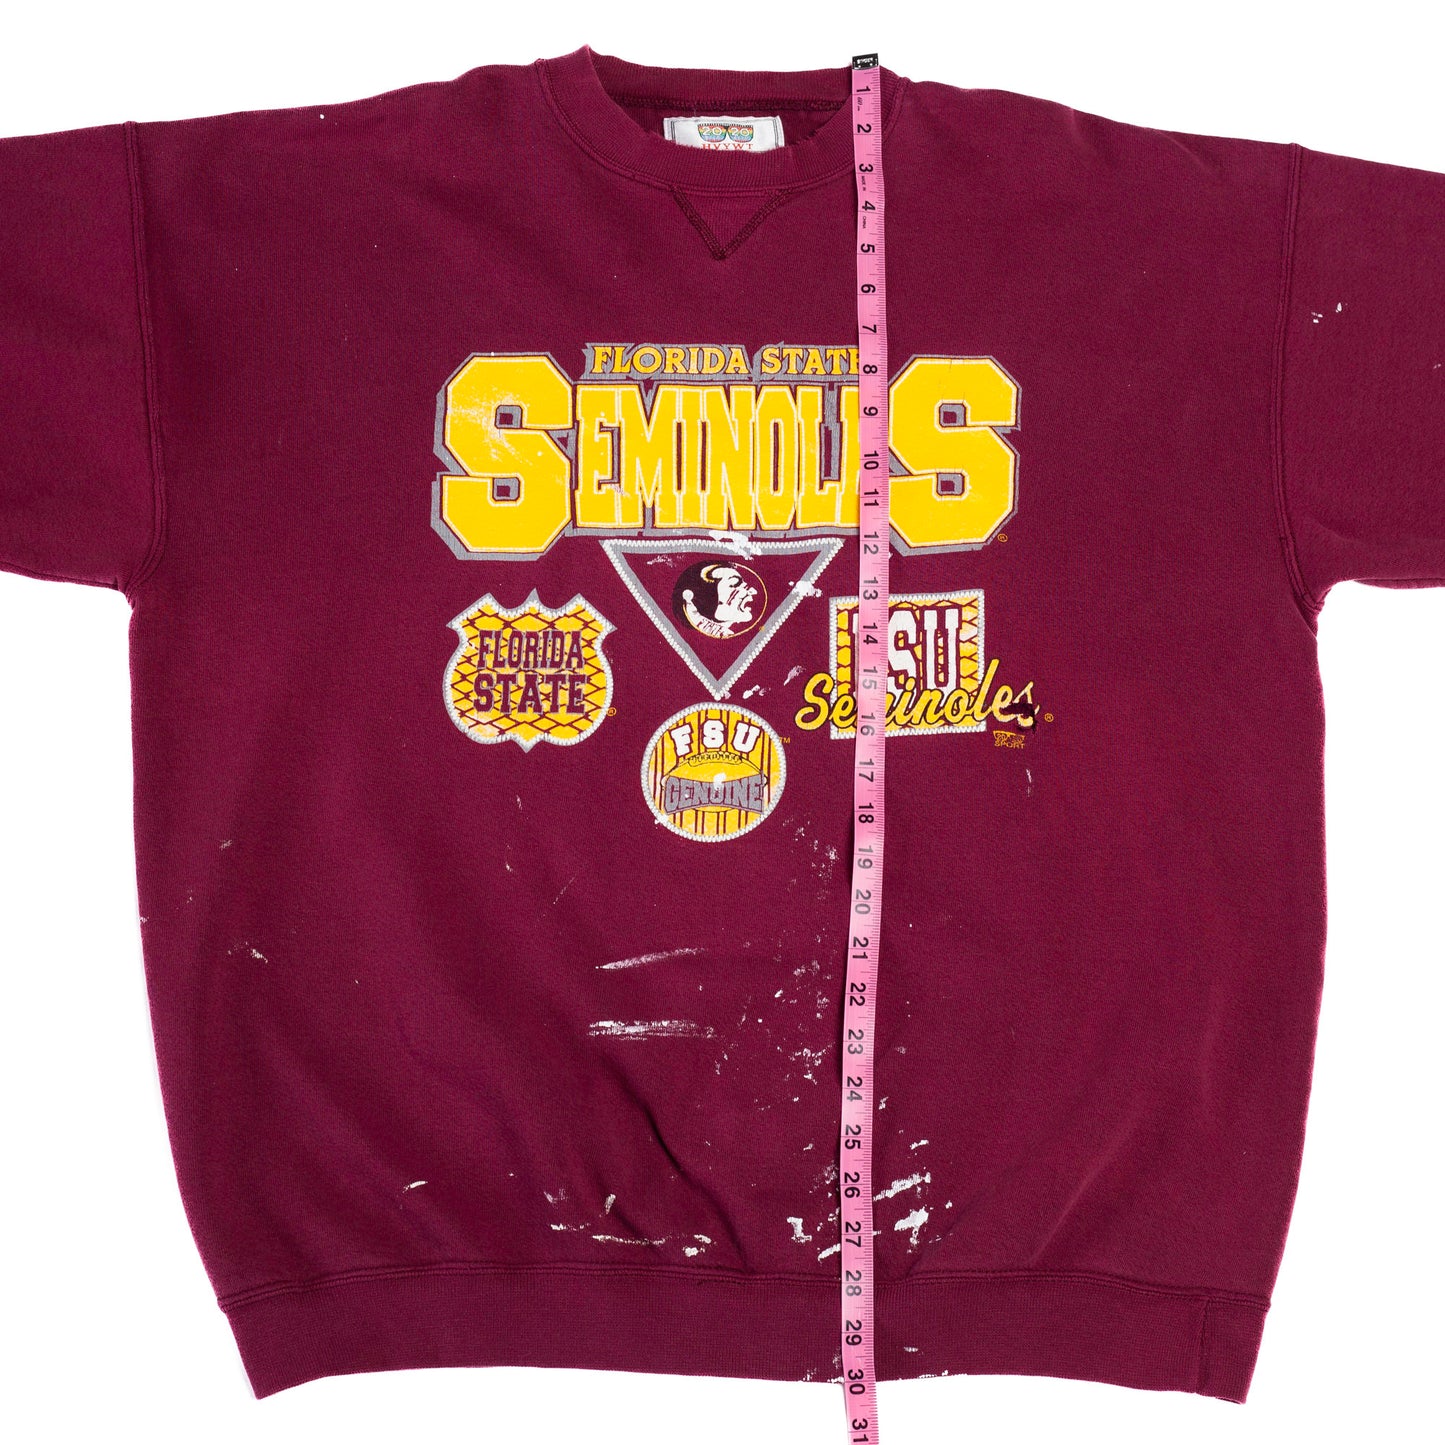 90s Florida State Seminoles Distressed Sweatshirt - Men's XL | Vintage FSU College Sports Paint Splattered Graphic Crewneck